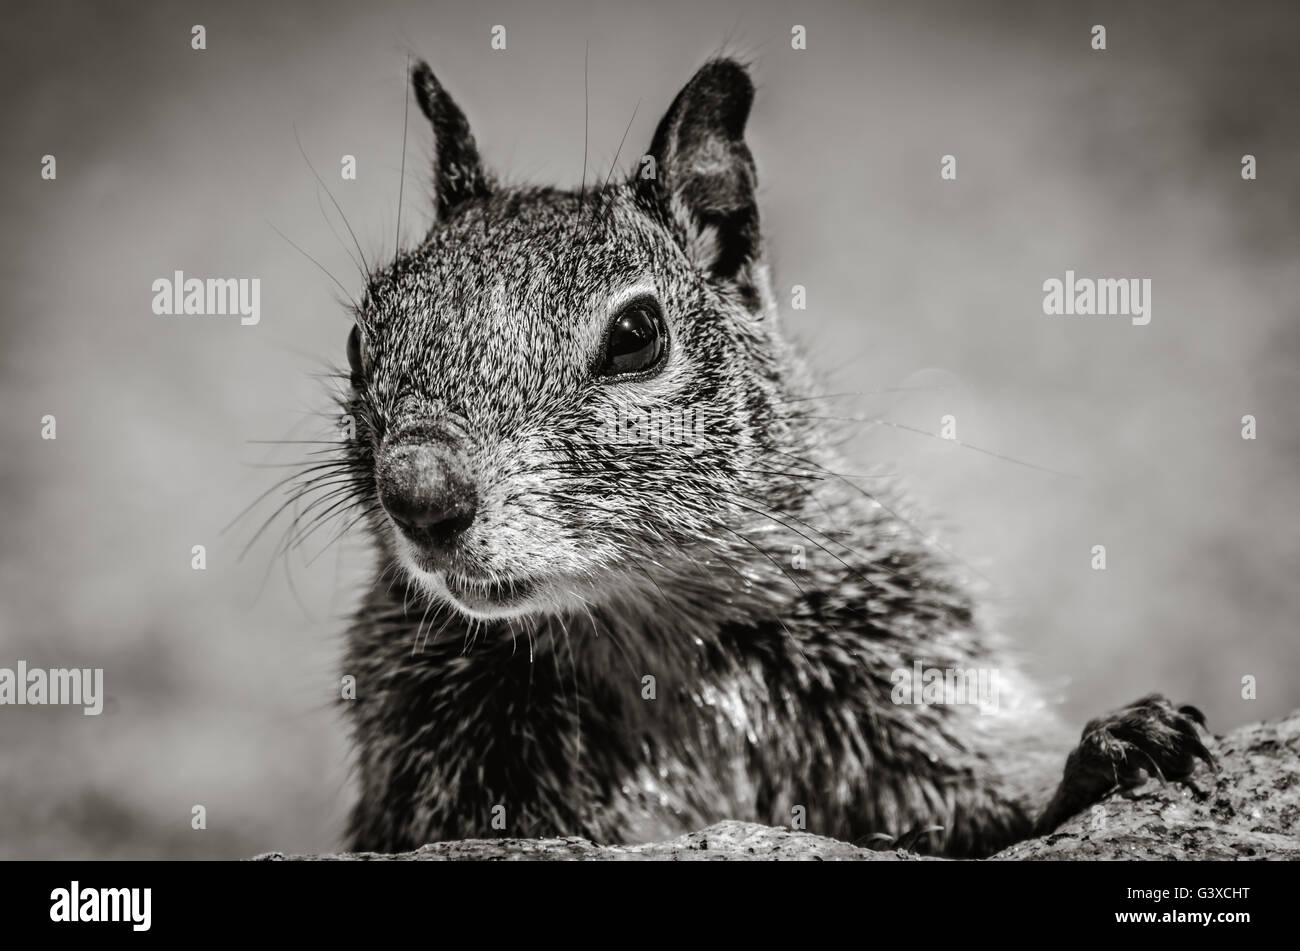 Original Portraits or a squirrel in Yosemite National Park, USA Stock Photo